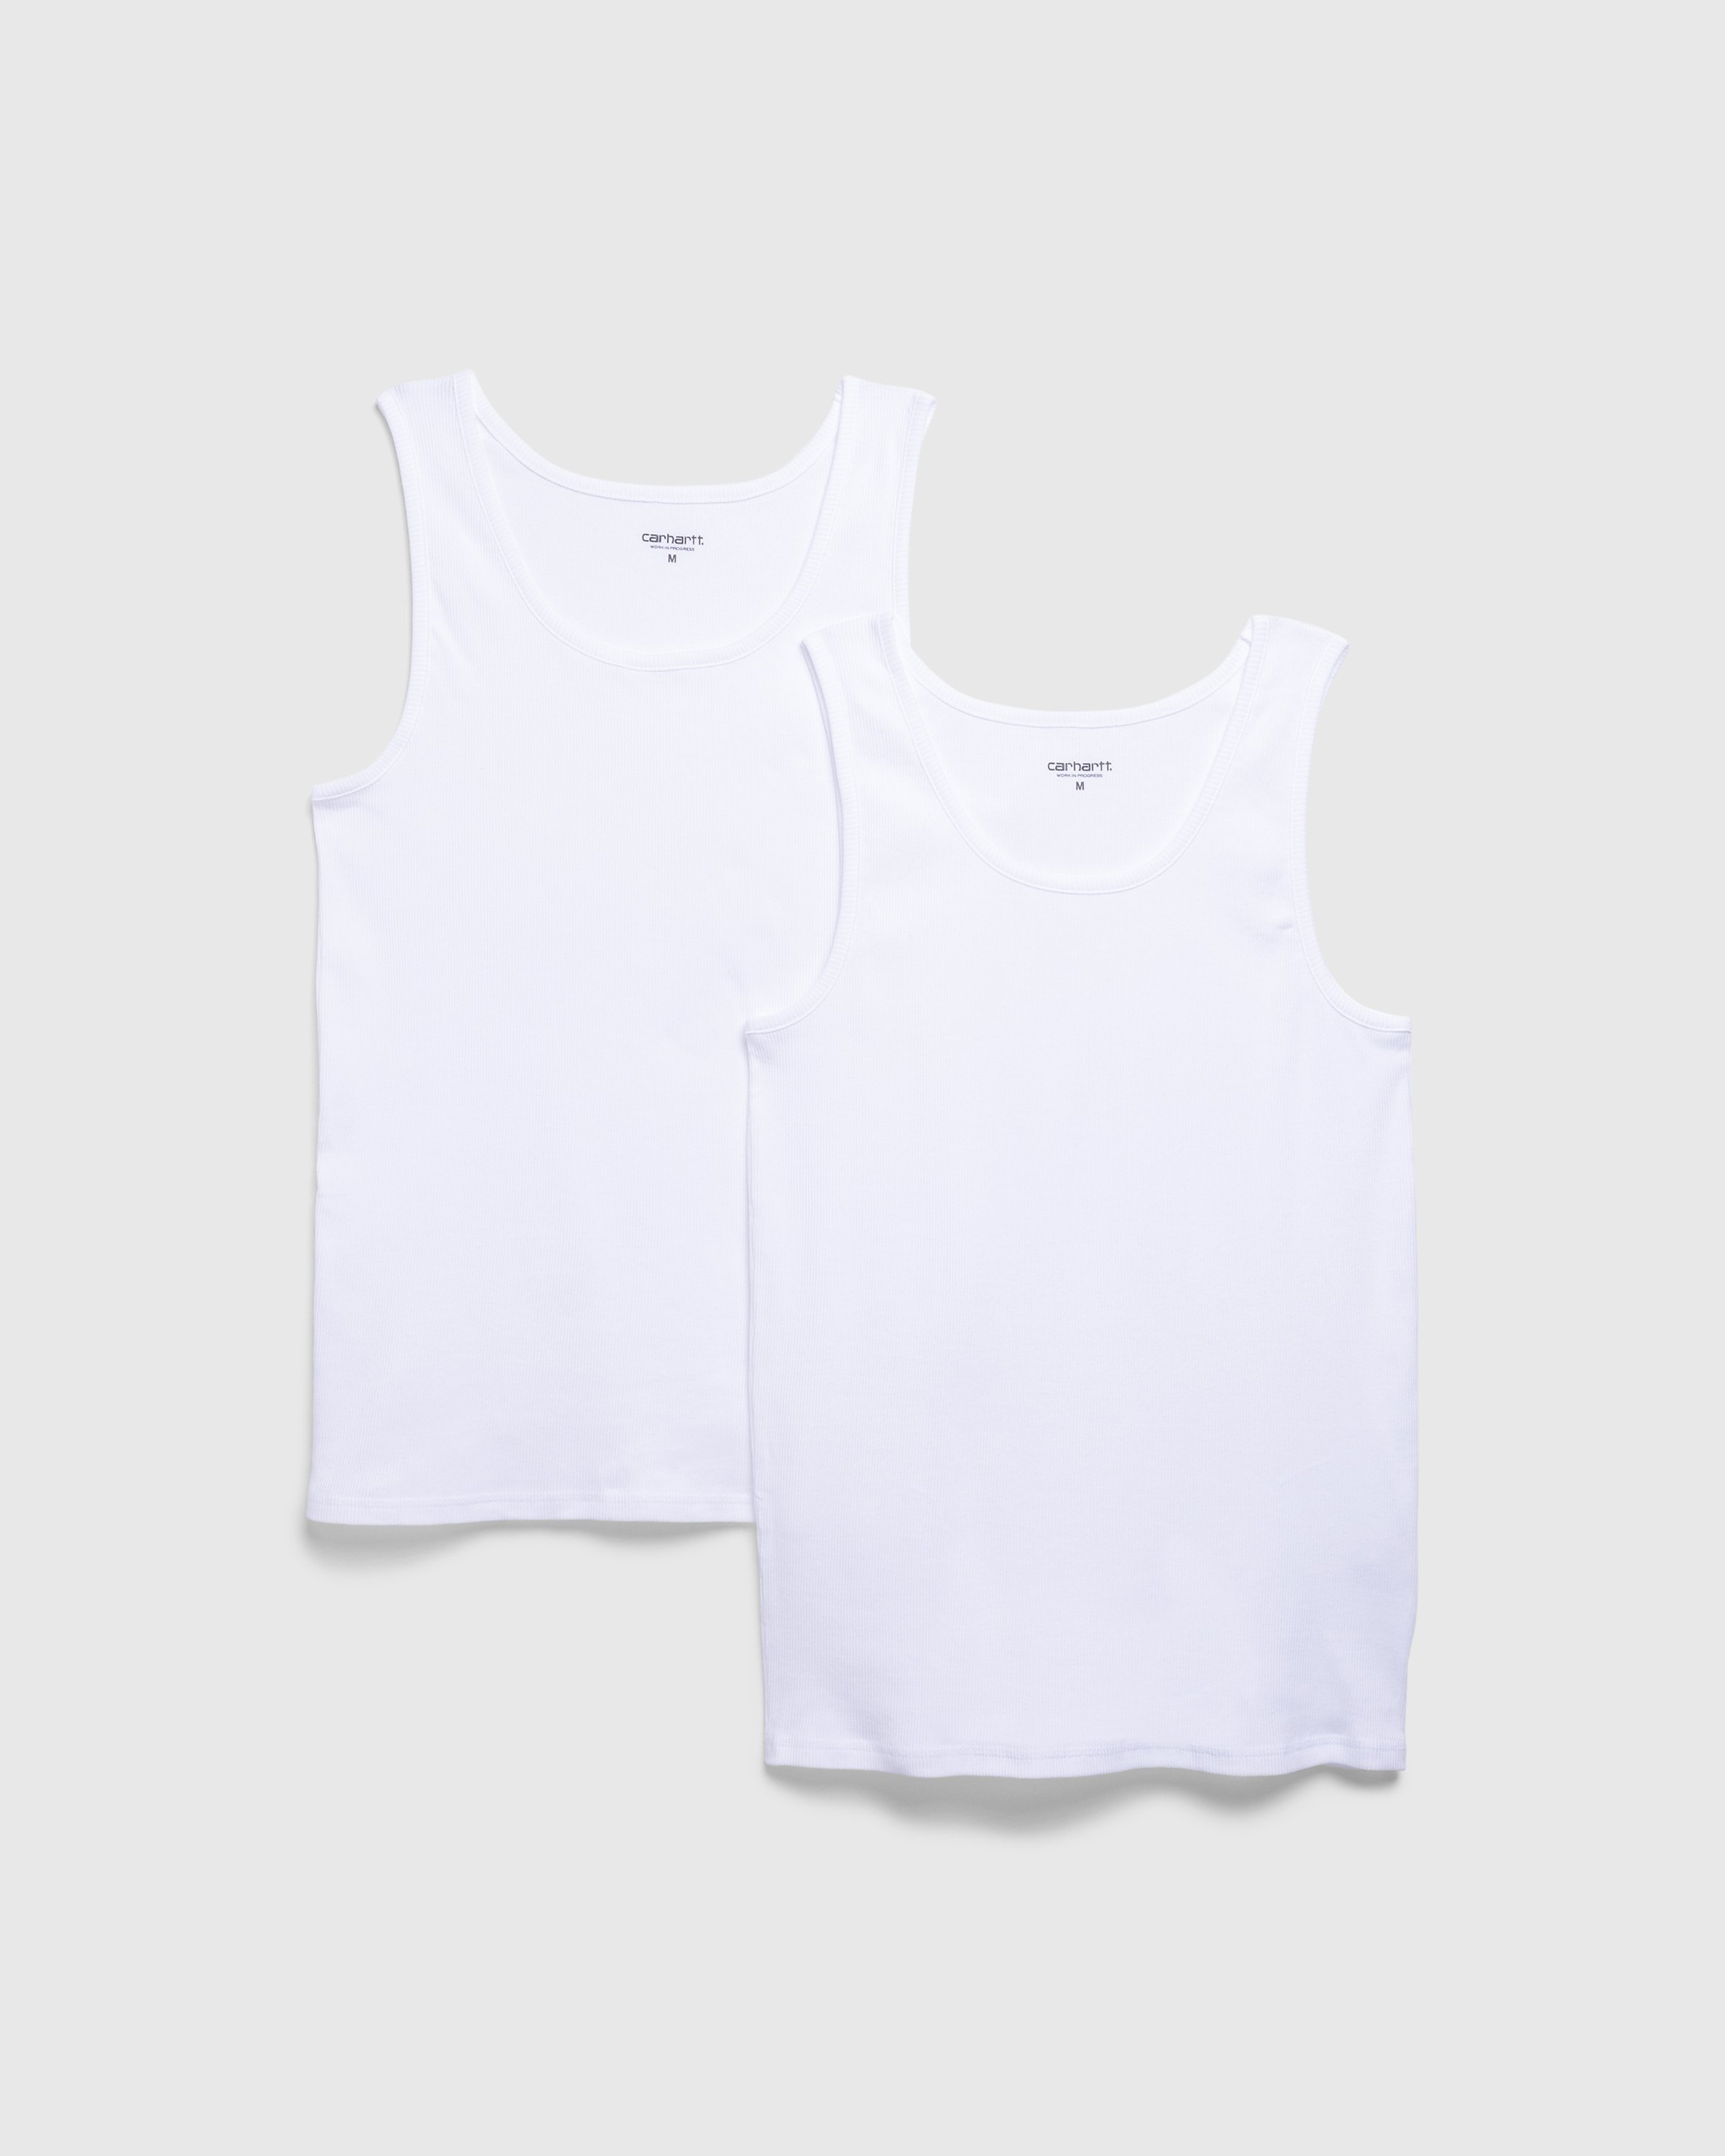 Carhartt WIP - AShirt White + White - Clothing - White - Image 1